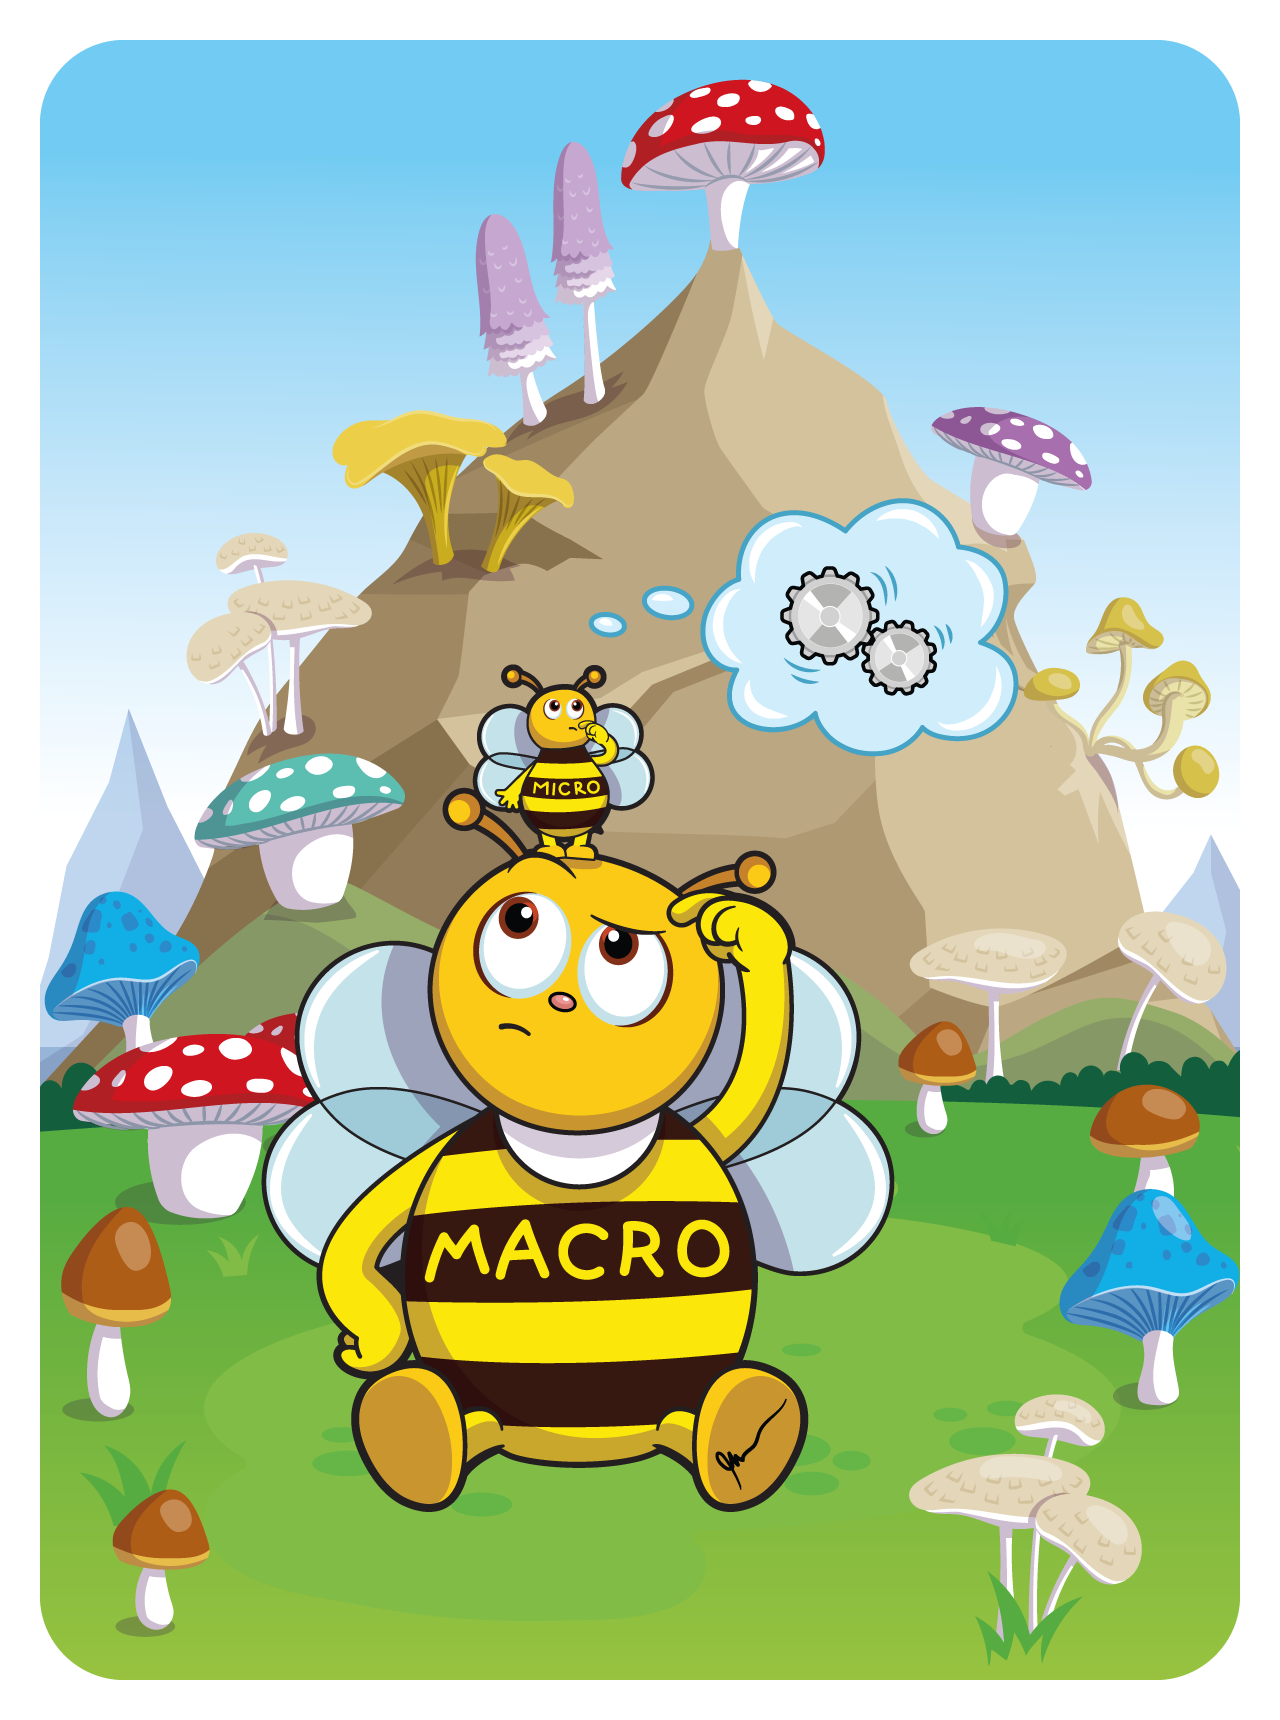 Macro Micro #30943